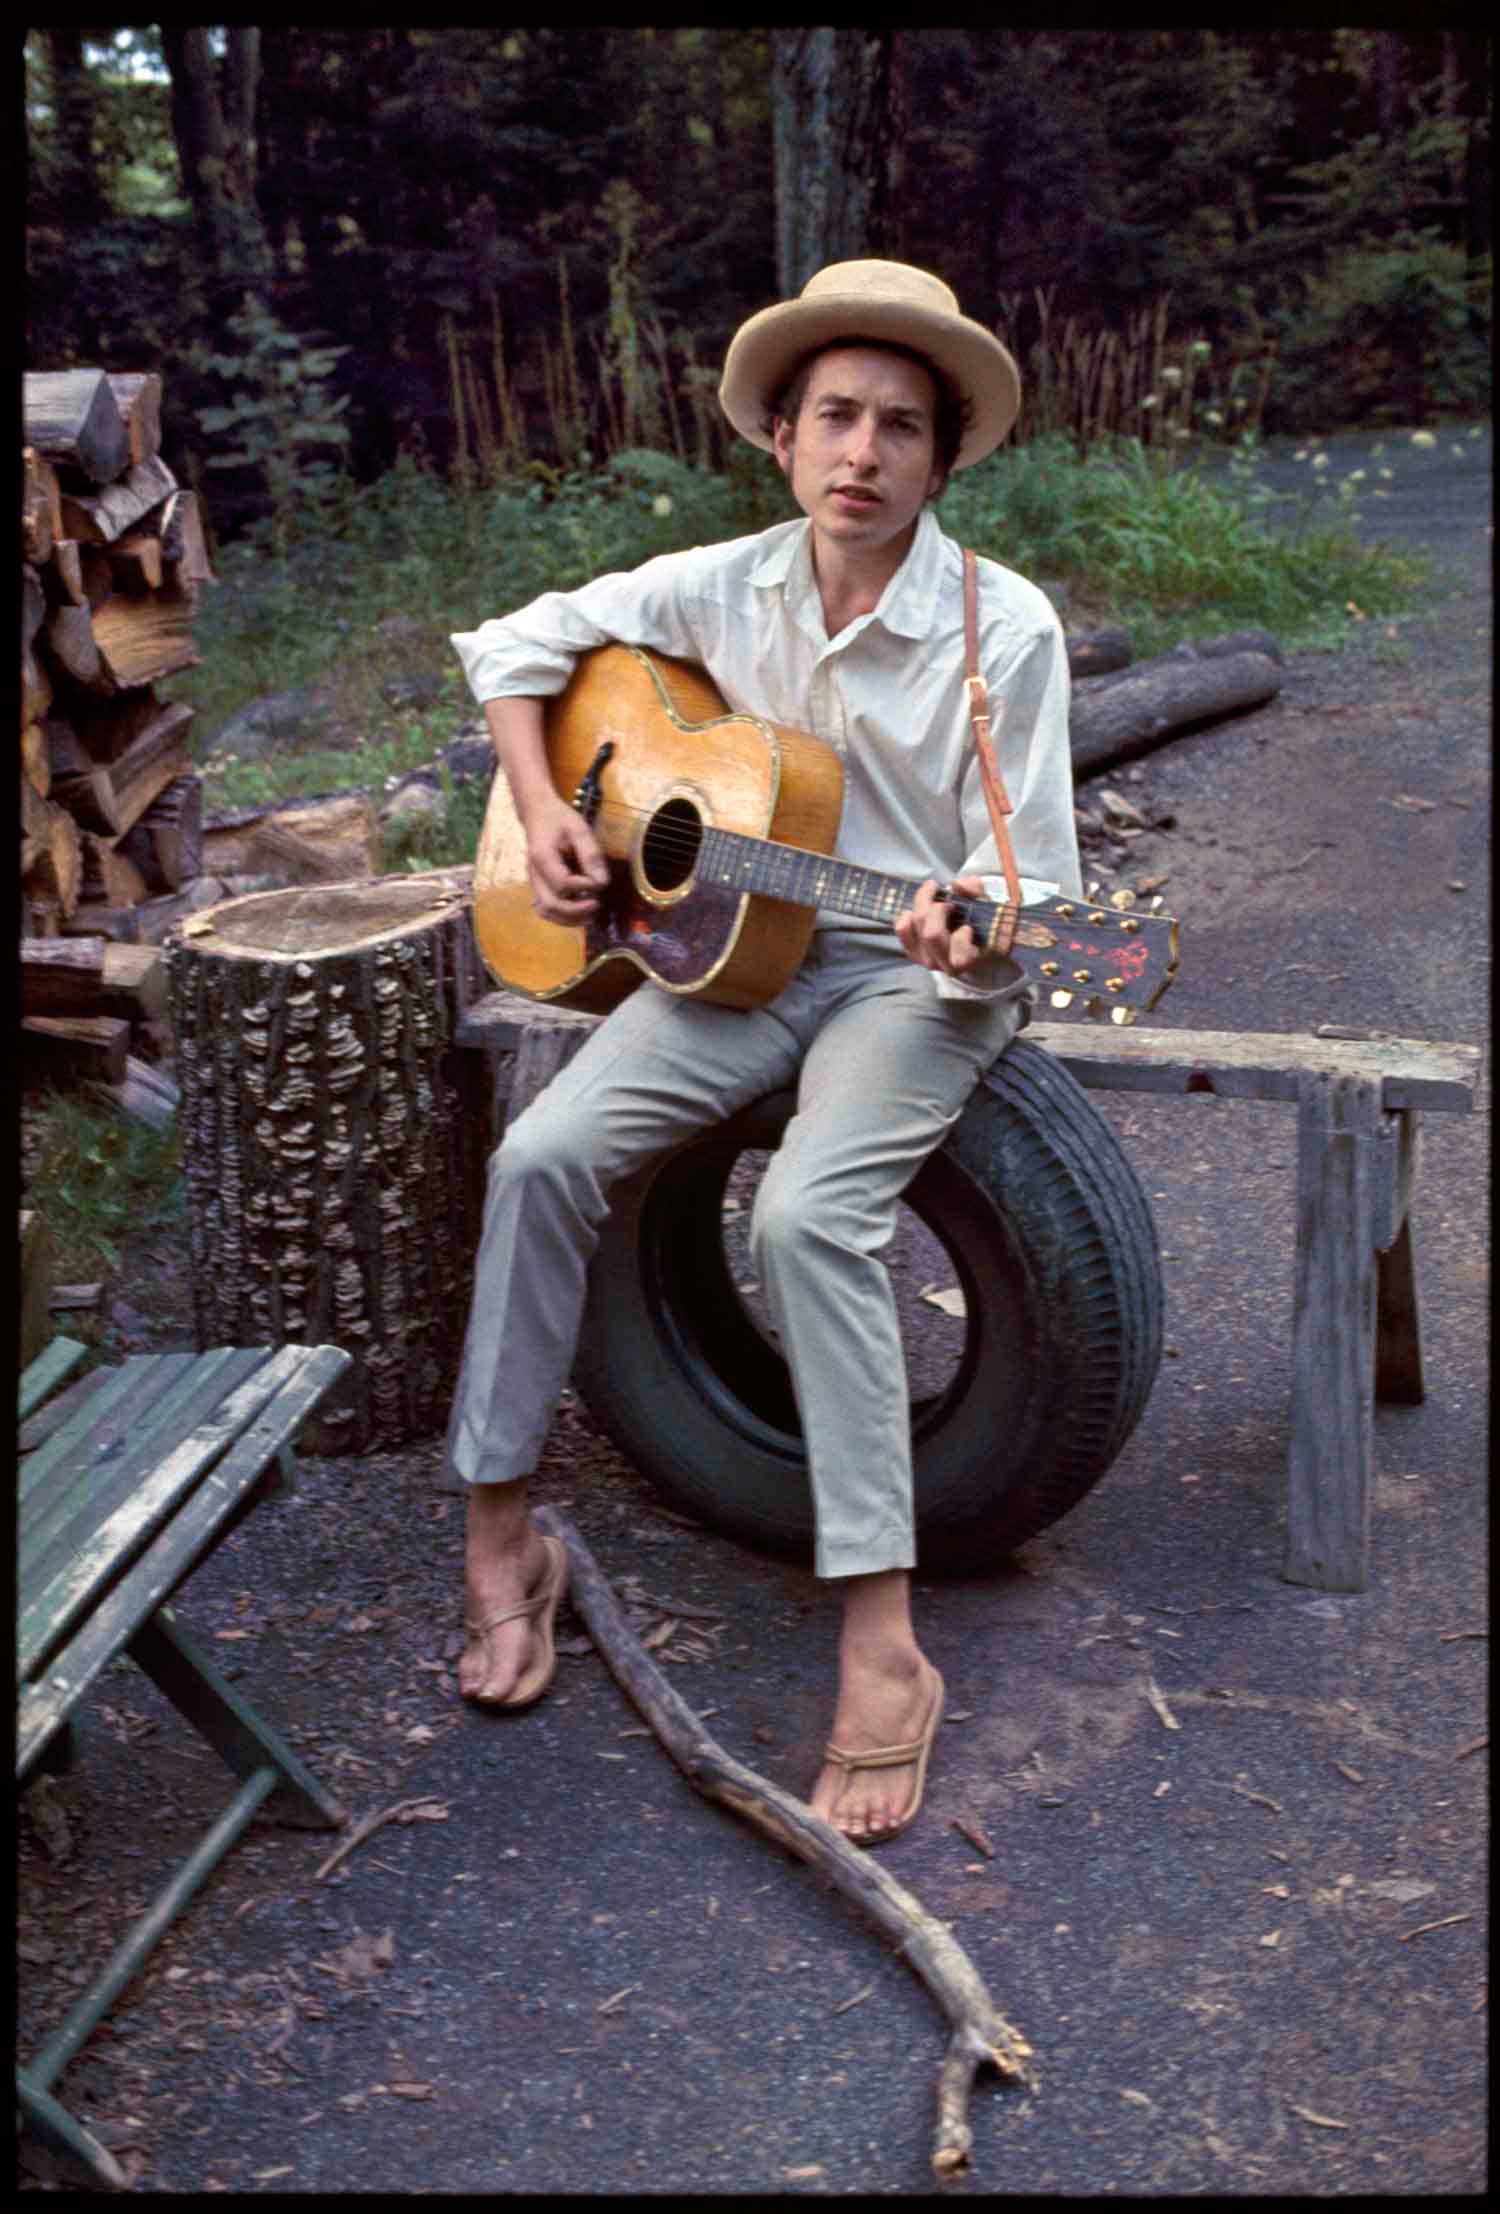 Dylan at Woodstock Image: Elliot Landy